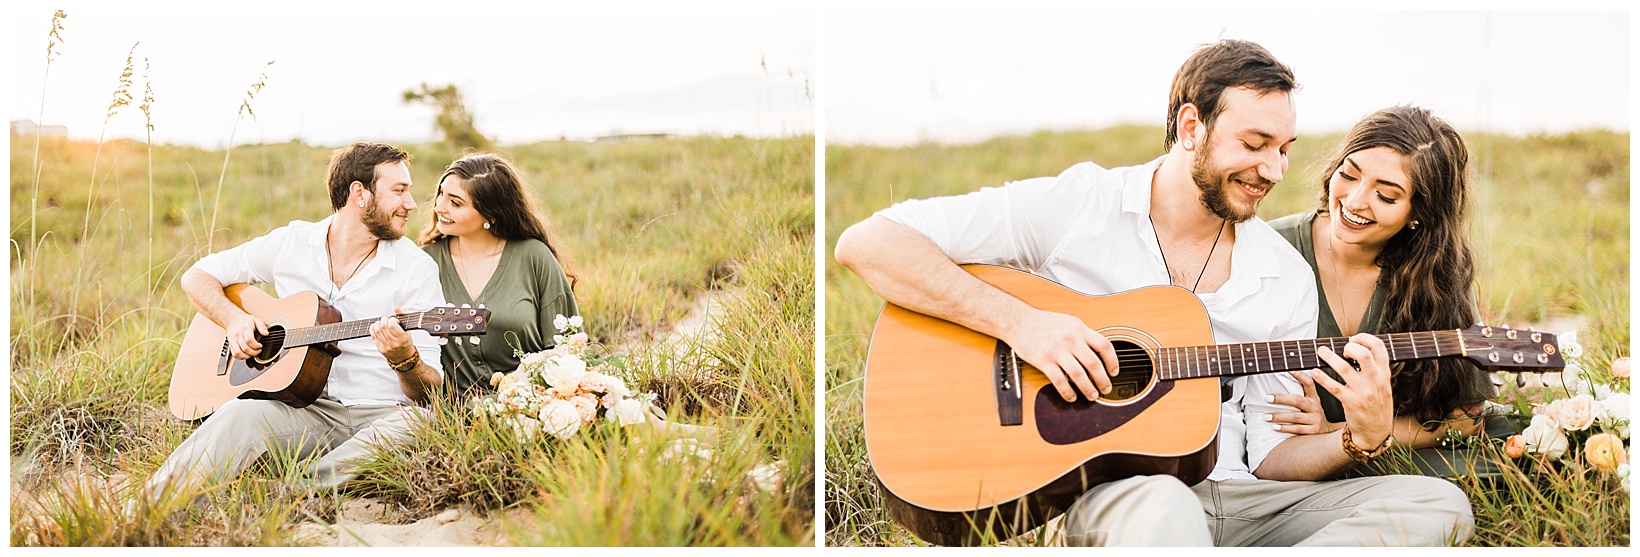 Virginia Beach musician elopement photographer couple inspiration with guitar